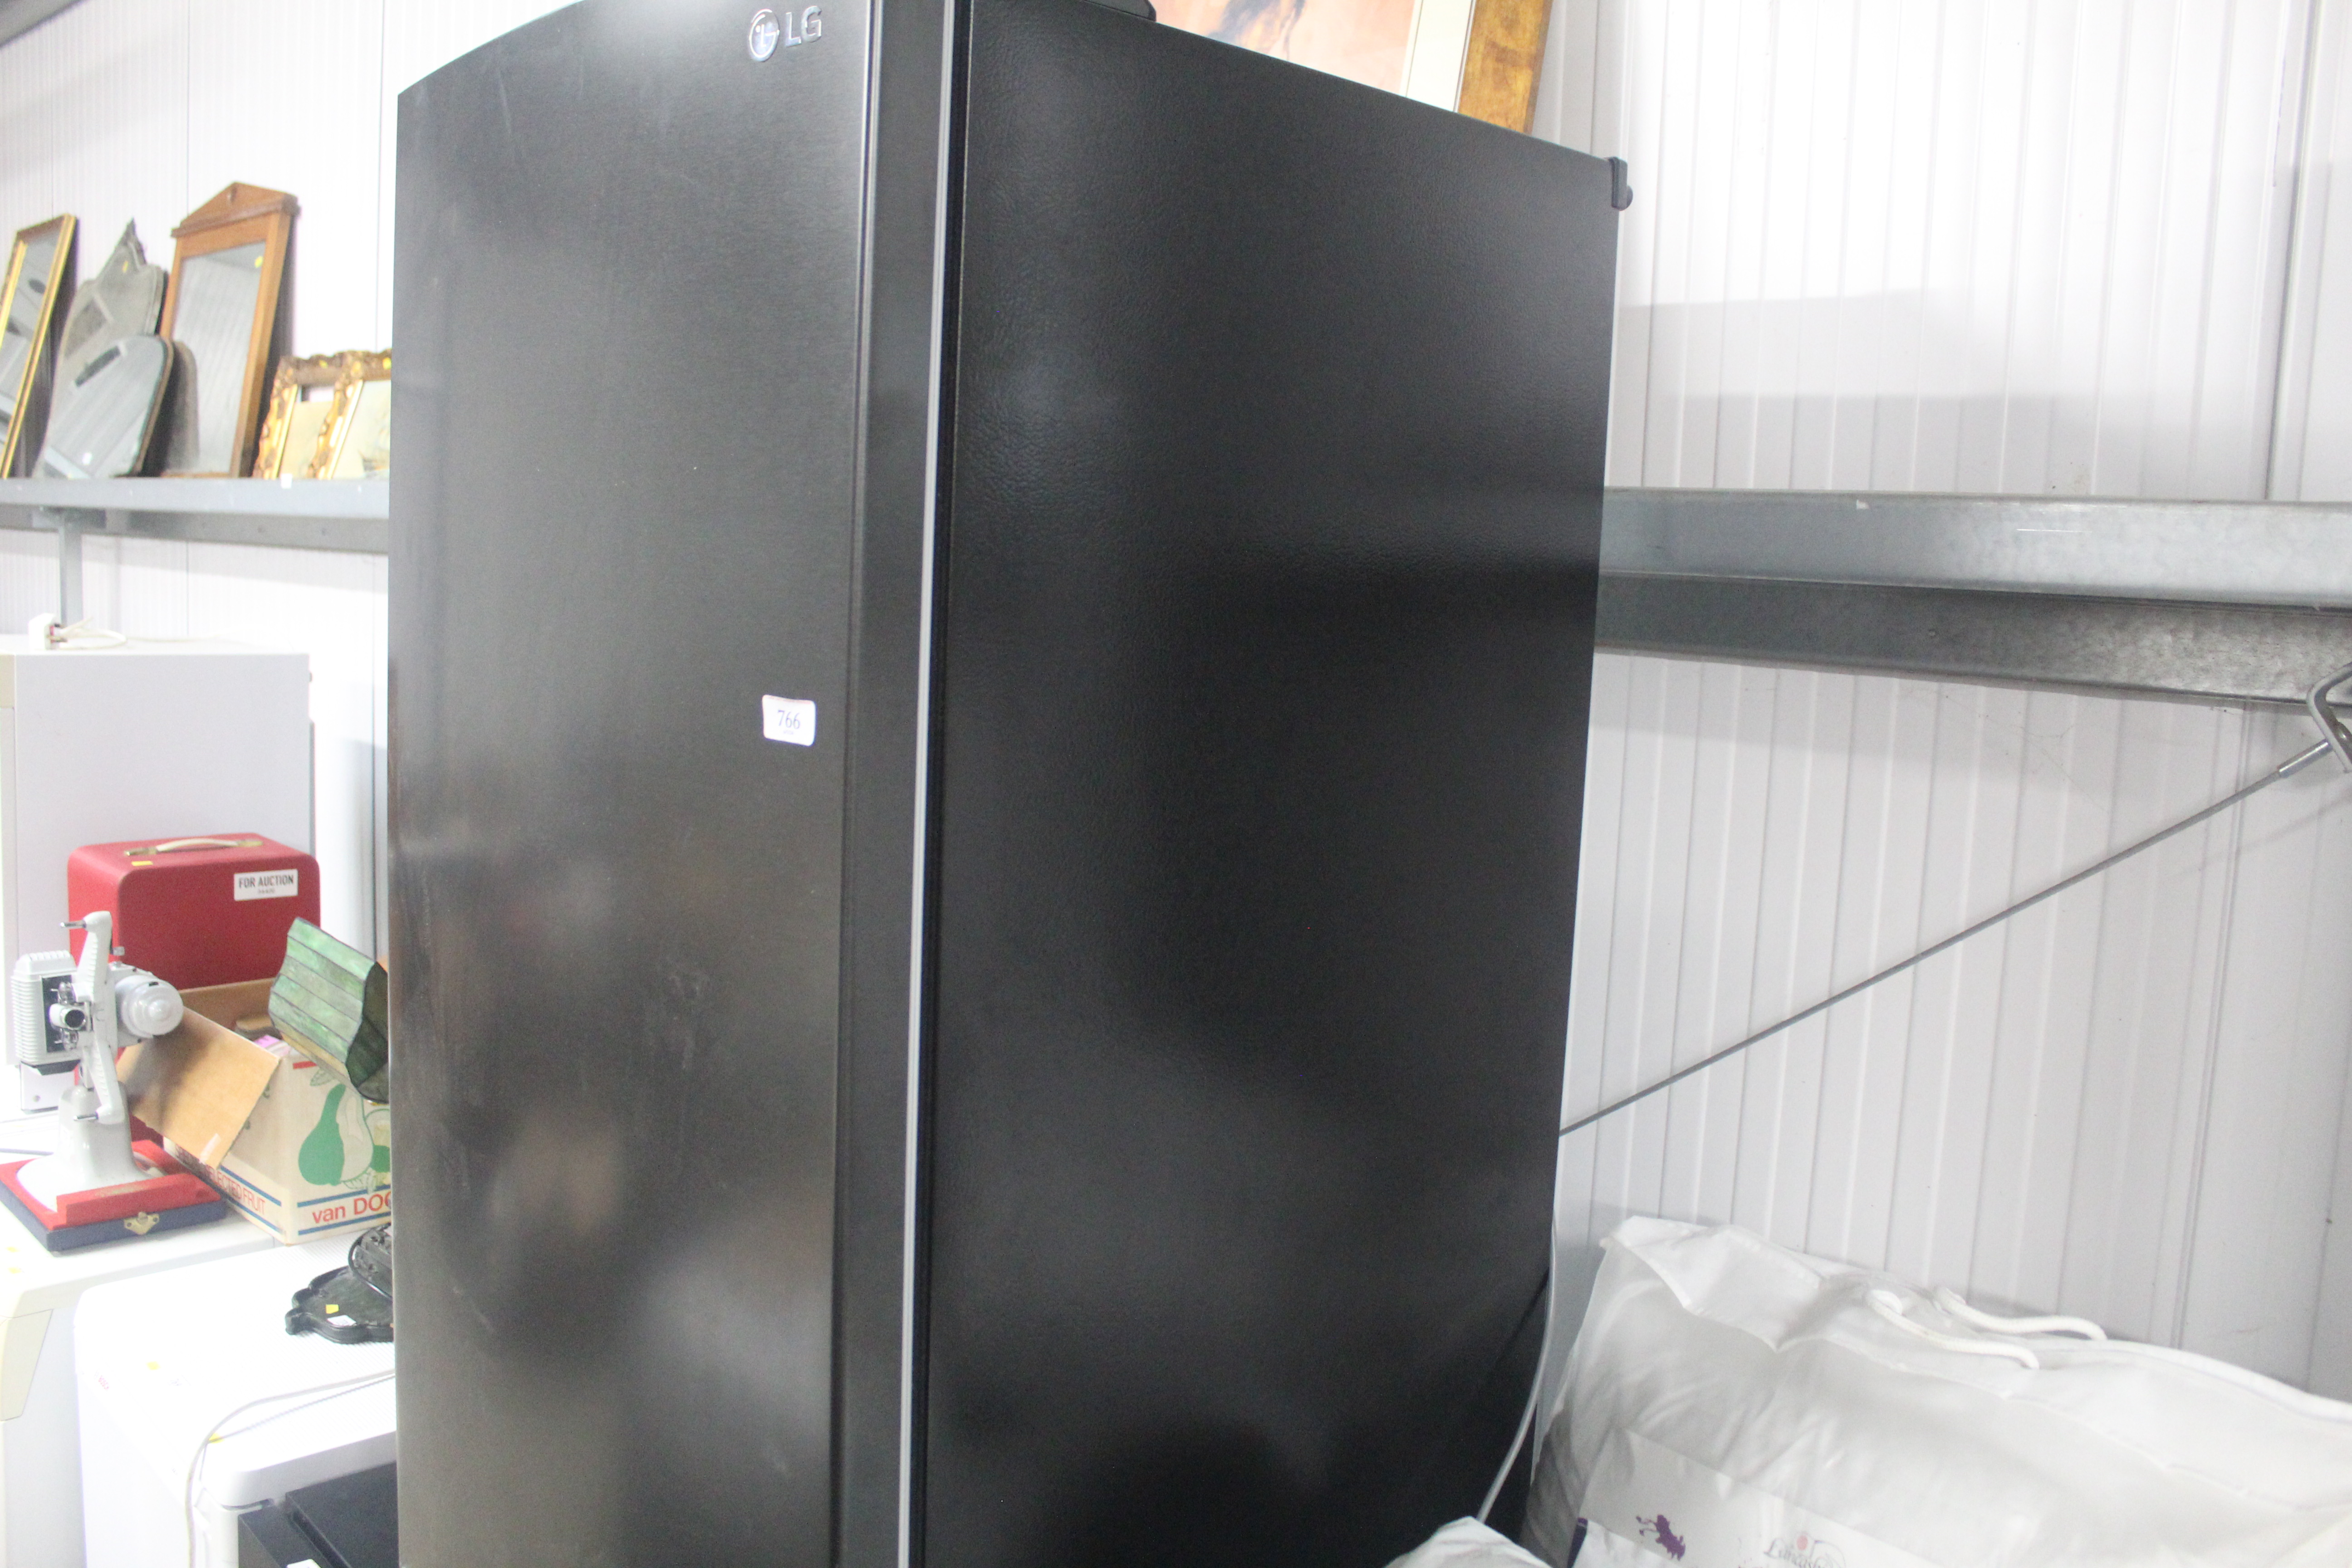 An LG fridge freezer - Image 4 of 6